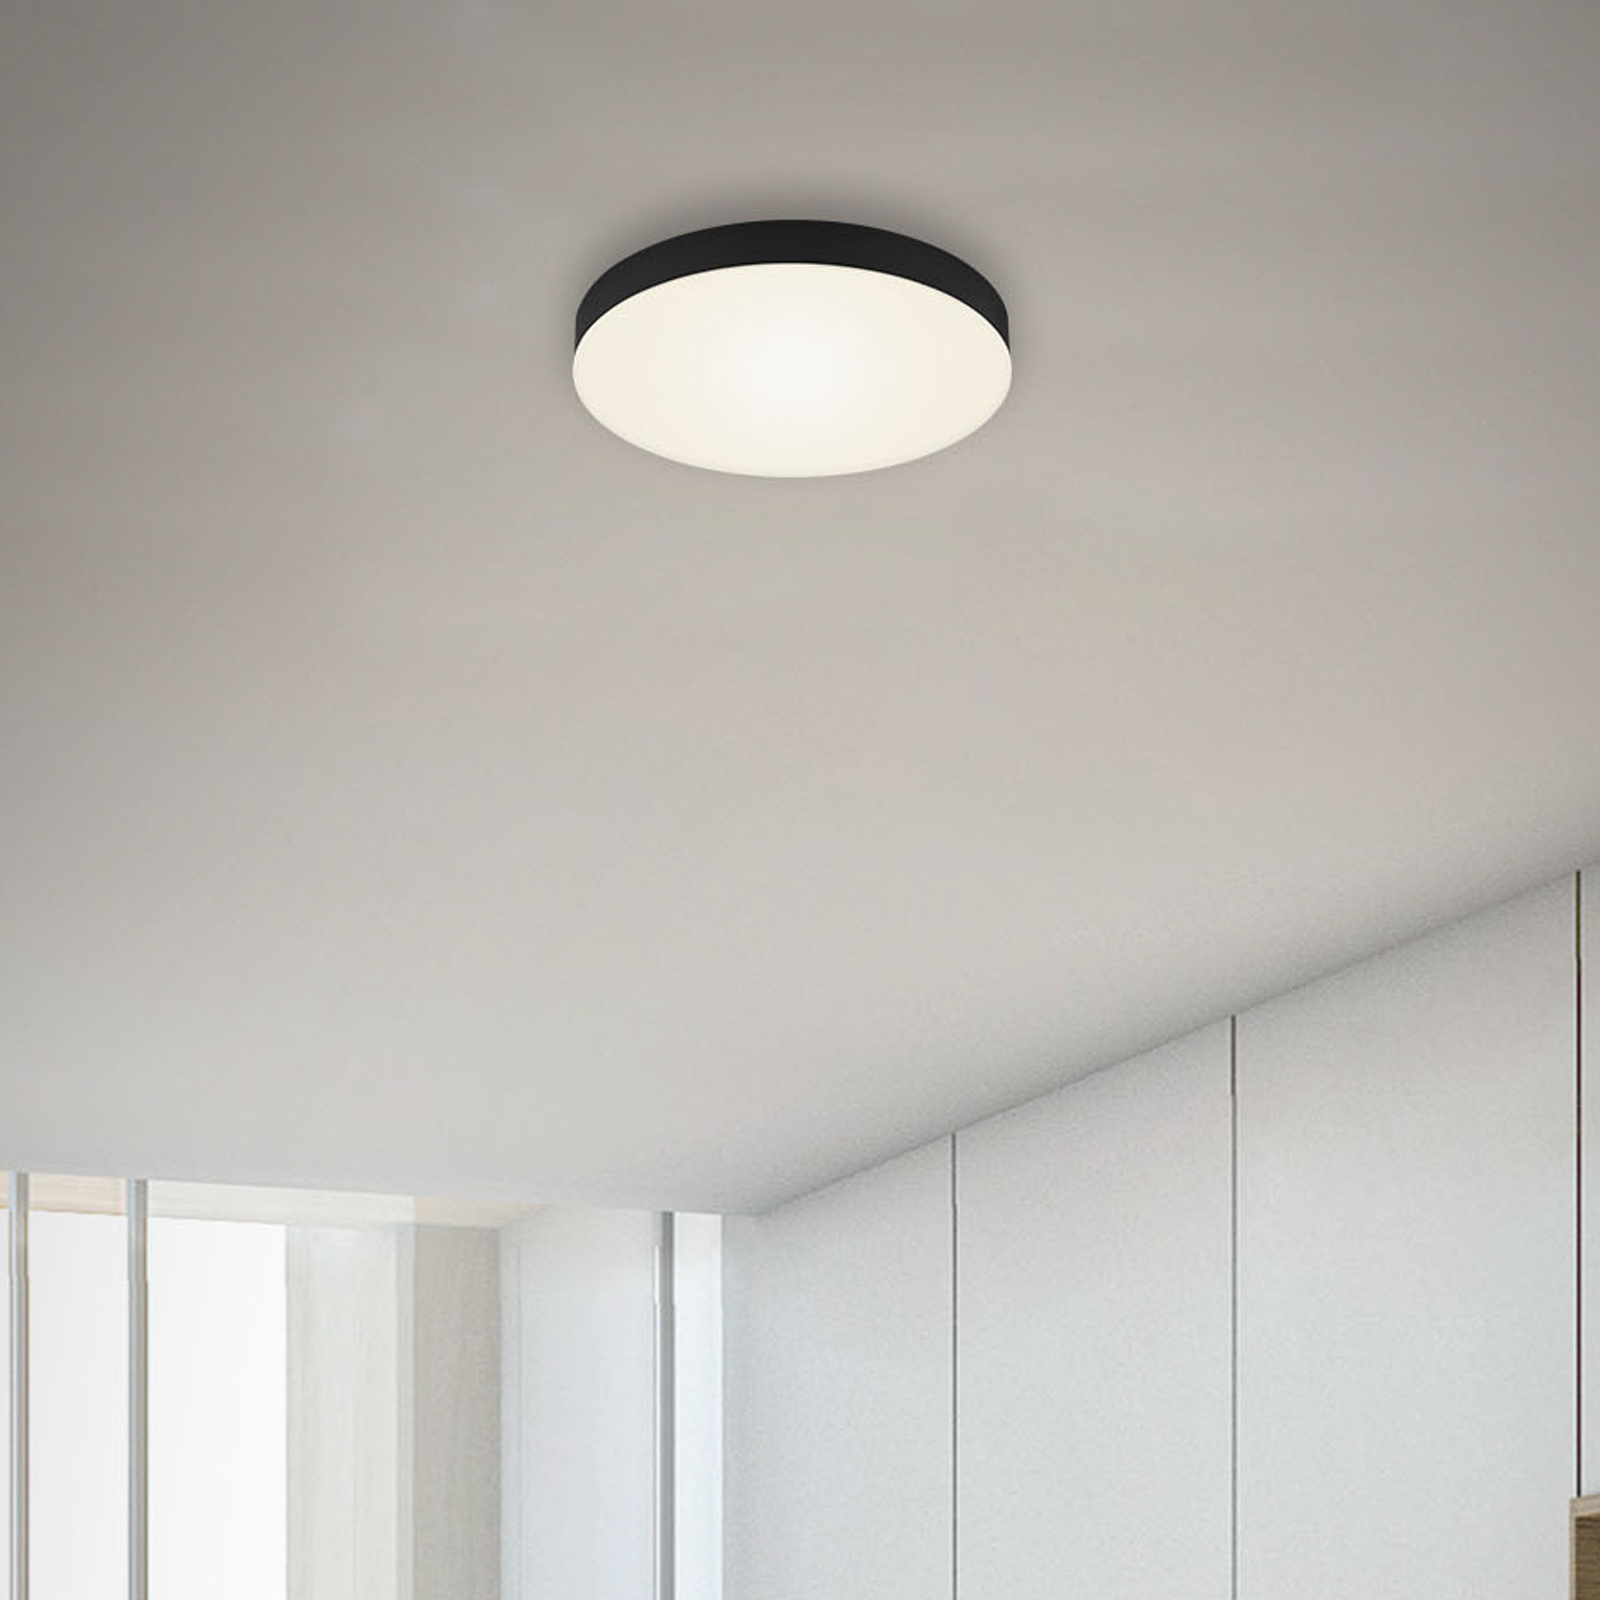 Flame LED ceiling light, Ø 21.2 cm, black